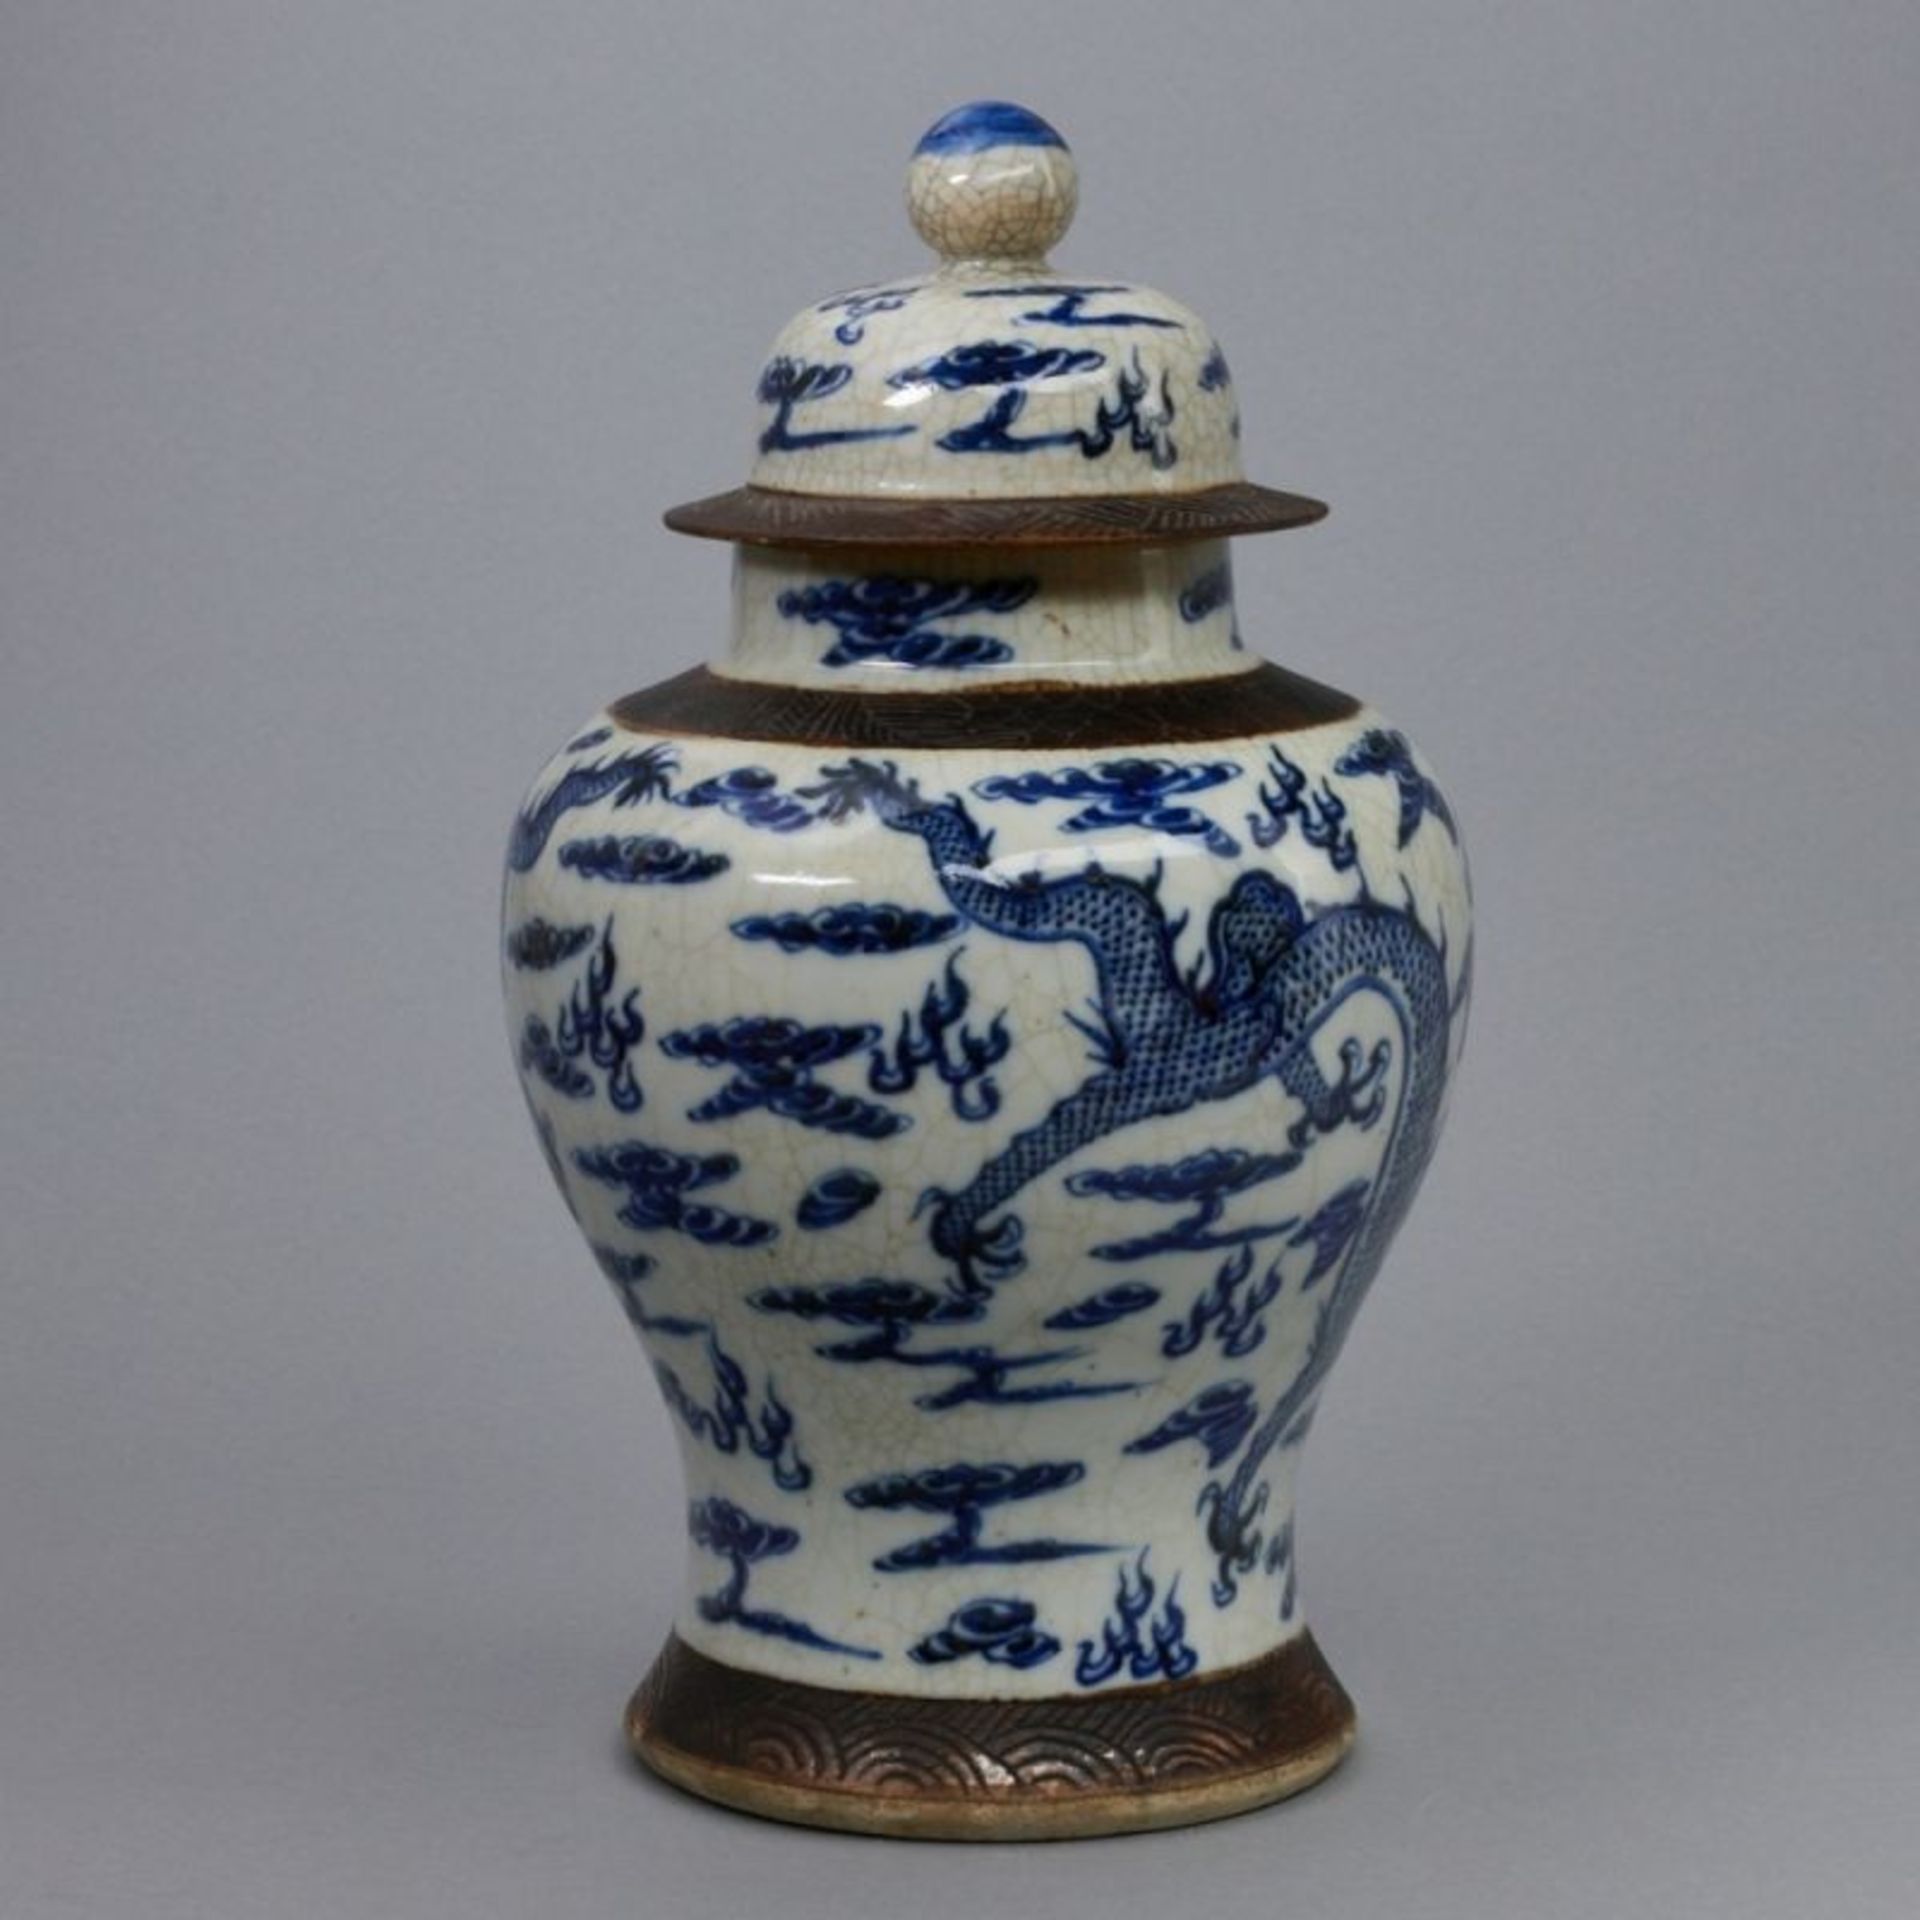 Deckelvase, China, Qing Dynastie, um 1800 - Image 2 of 4